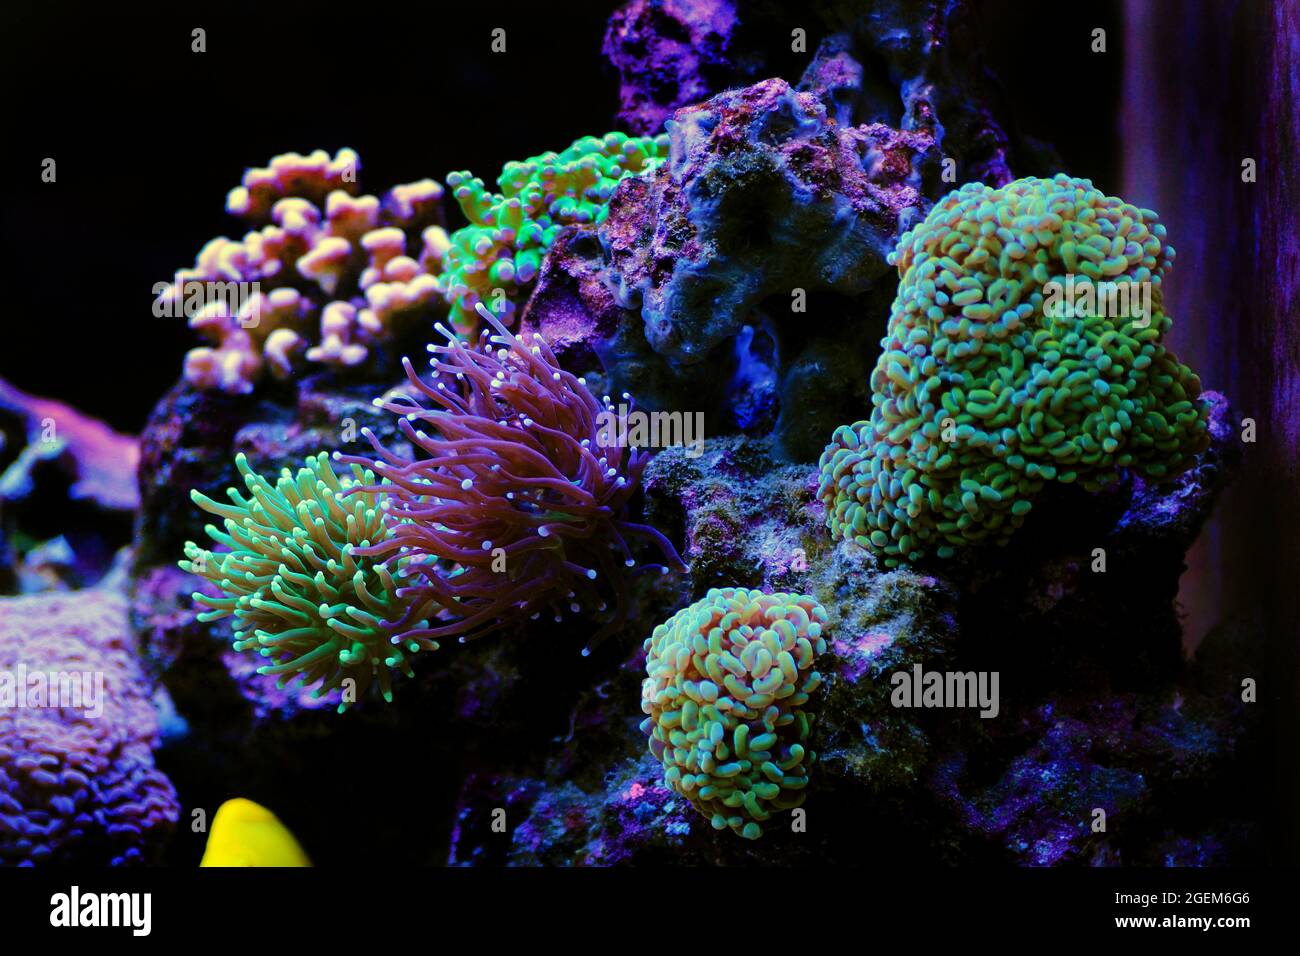 Euphyllia Crtistata, rare LPS coral in reef aquarium tank Stock Photo -  Alamy